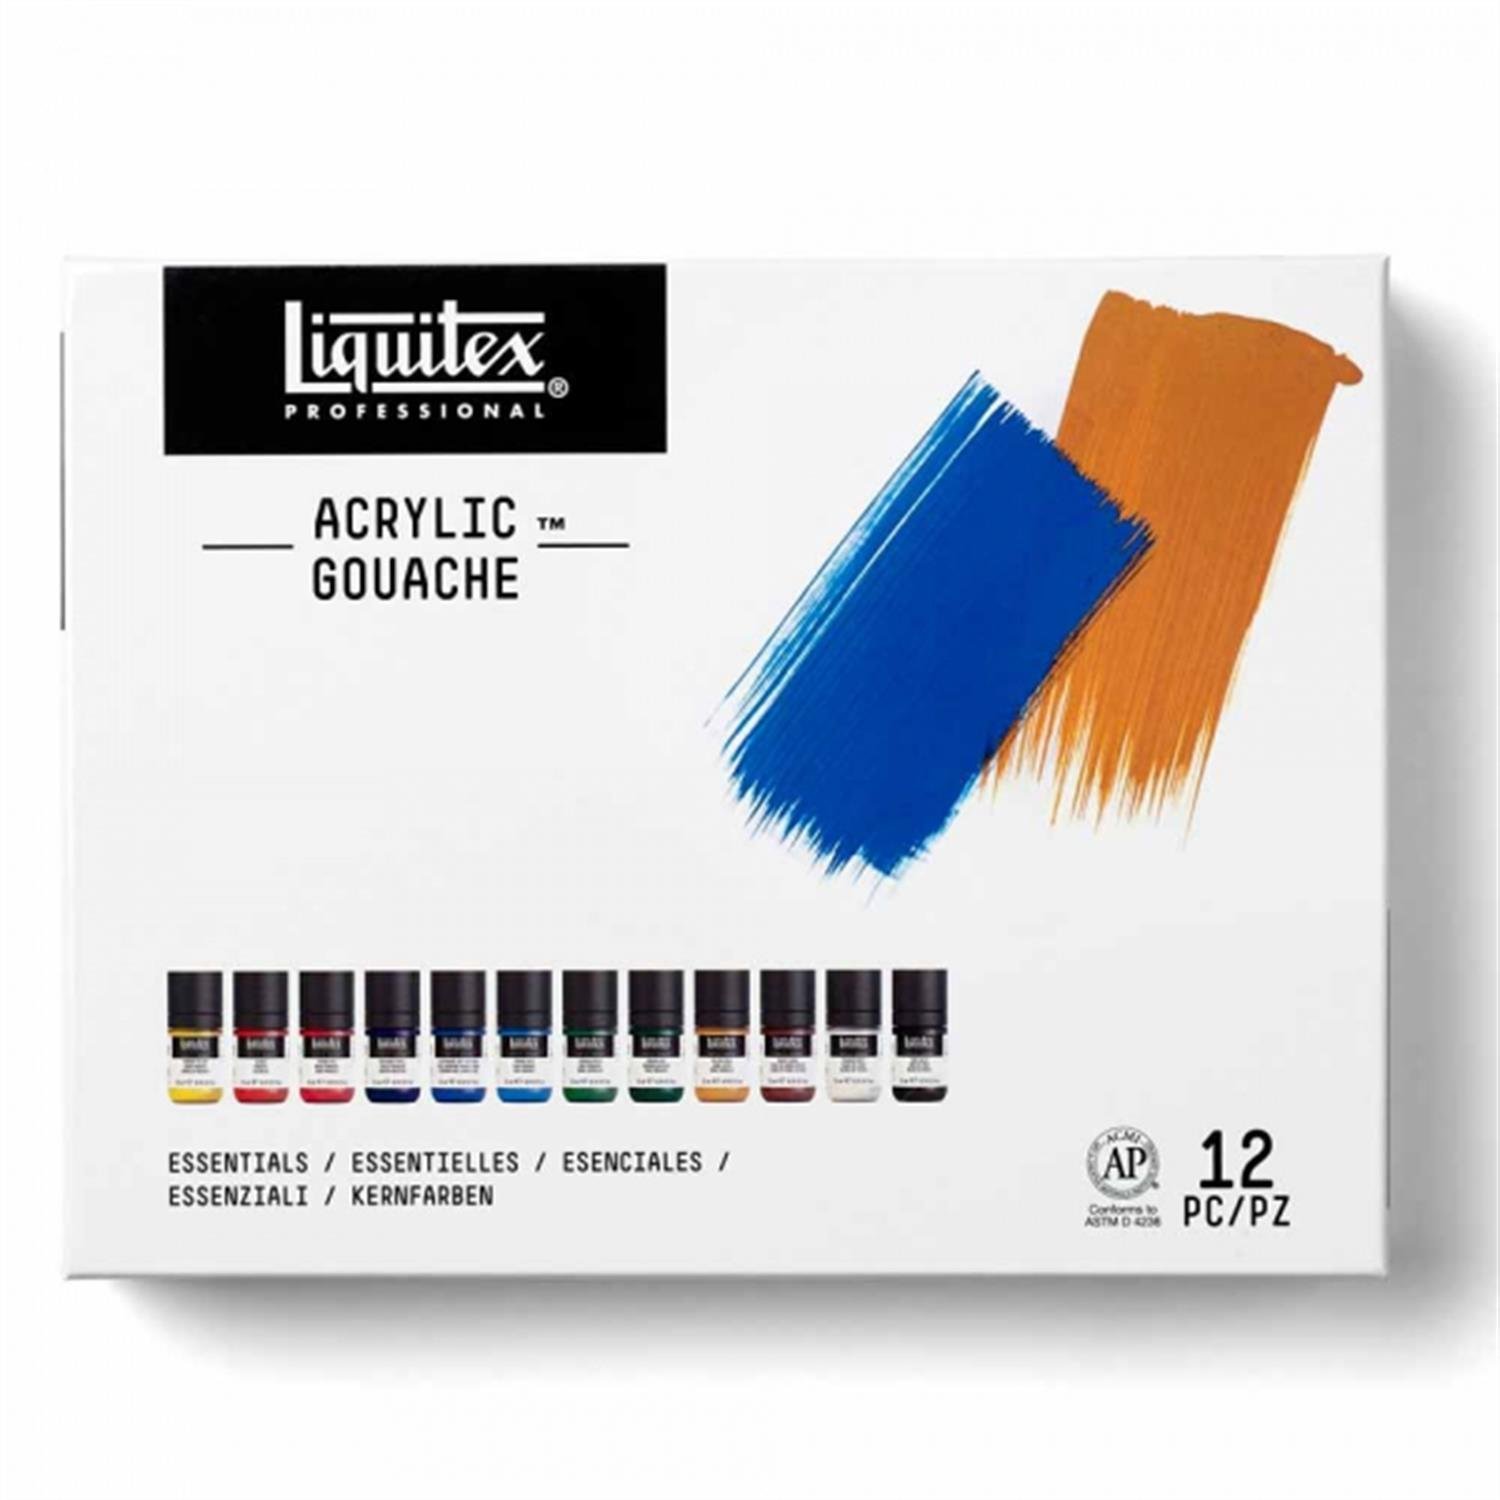 Liquitex Professional Acrylic Goauche Akrilik Guaj Boya Set 12x22ml  Essentials